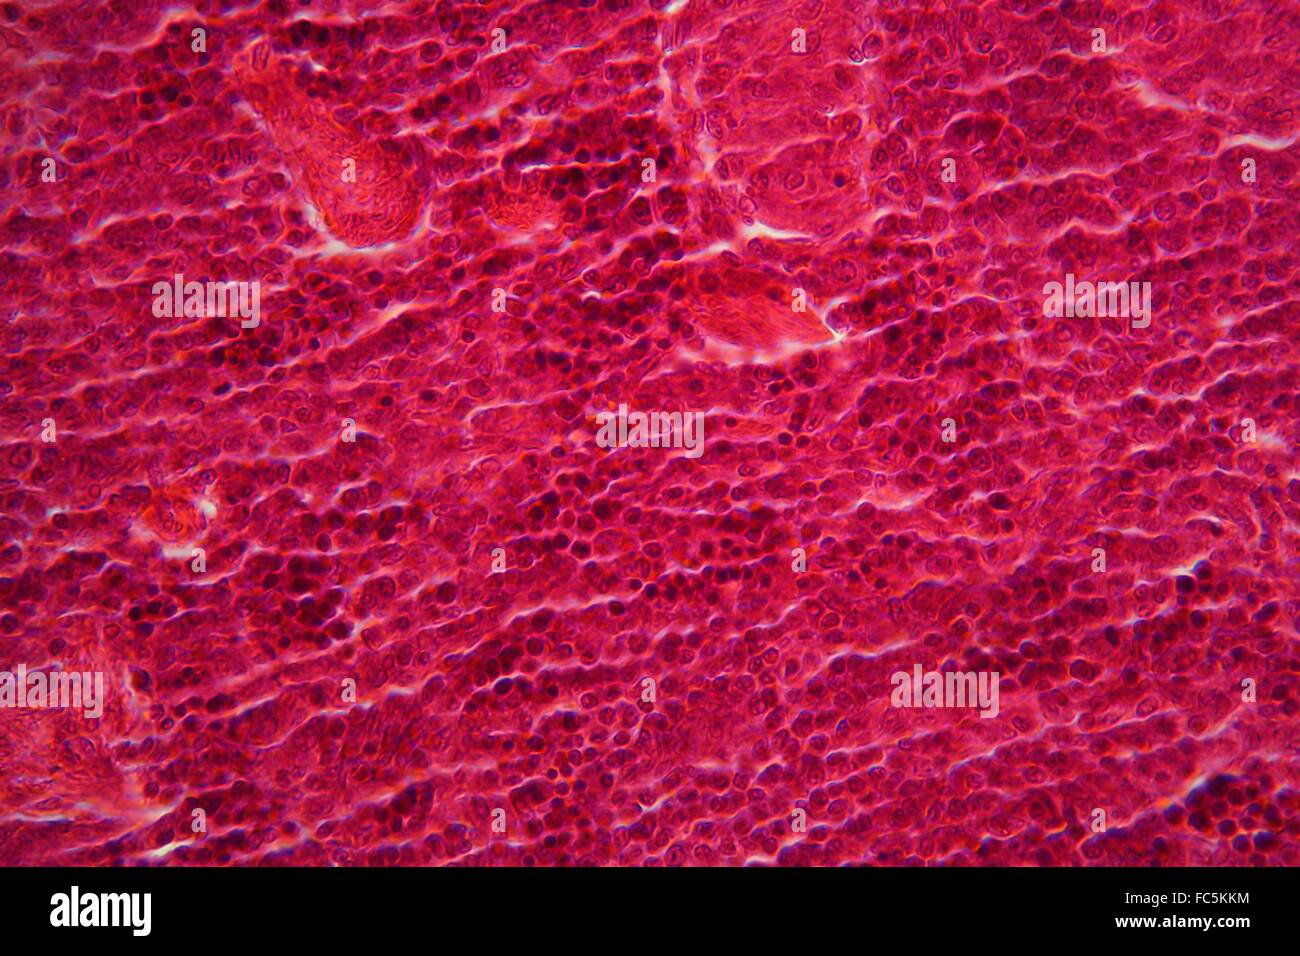 Pancreas tissue under the microscope. Stock Photo